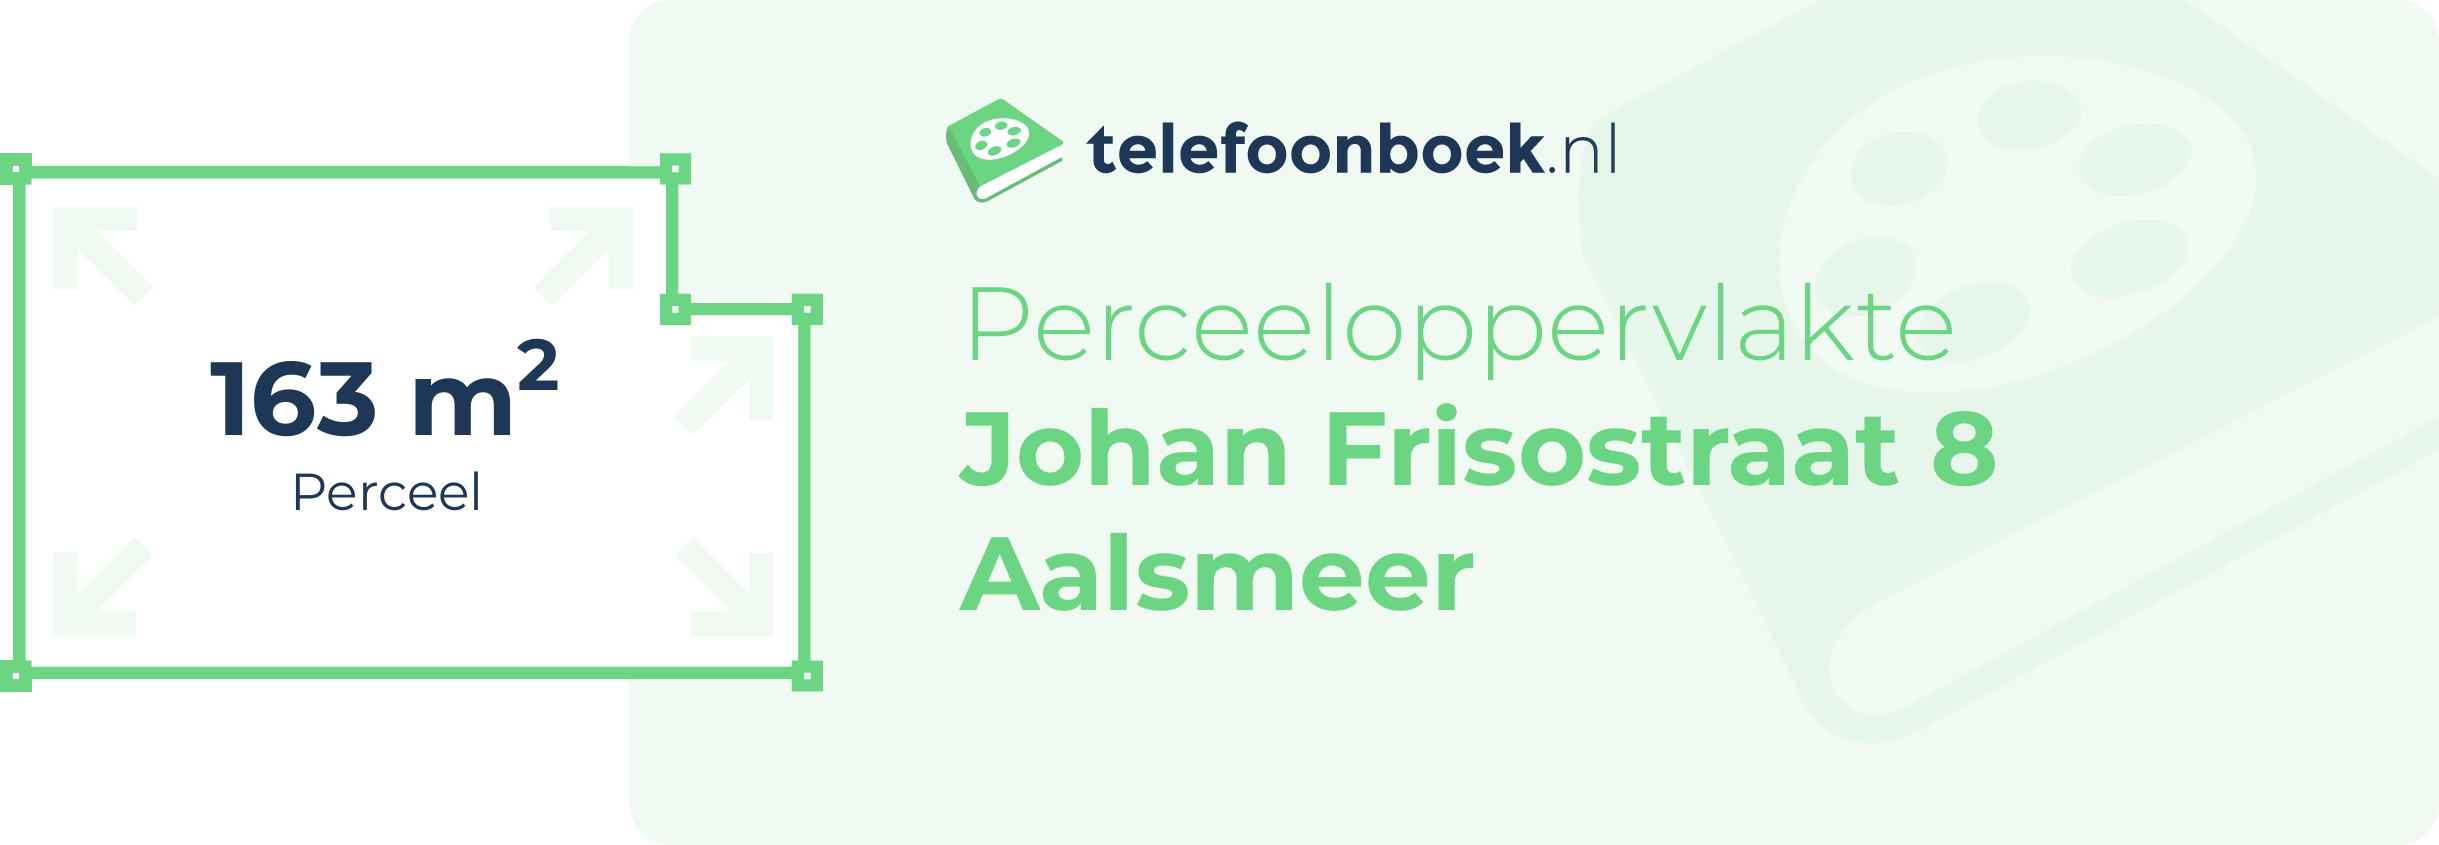 Perceeloppervlakte Johan Frisostraat 8 Aalsmeer